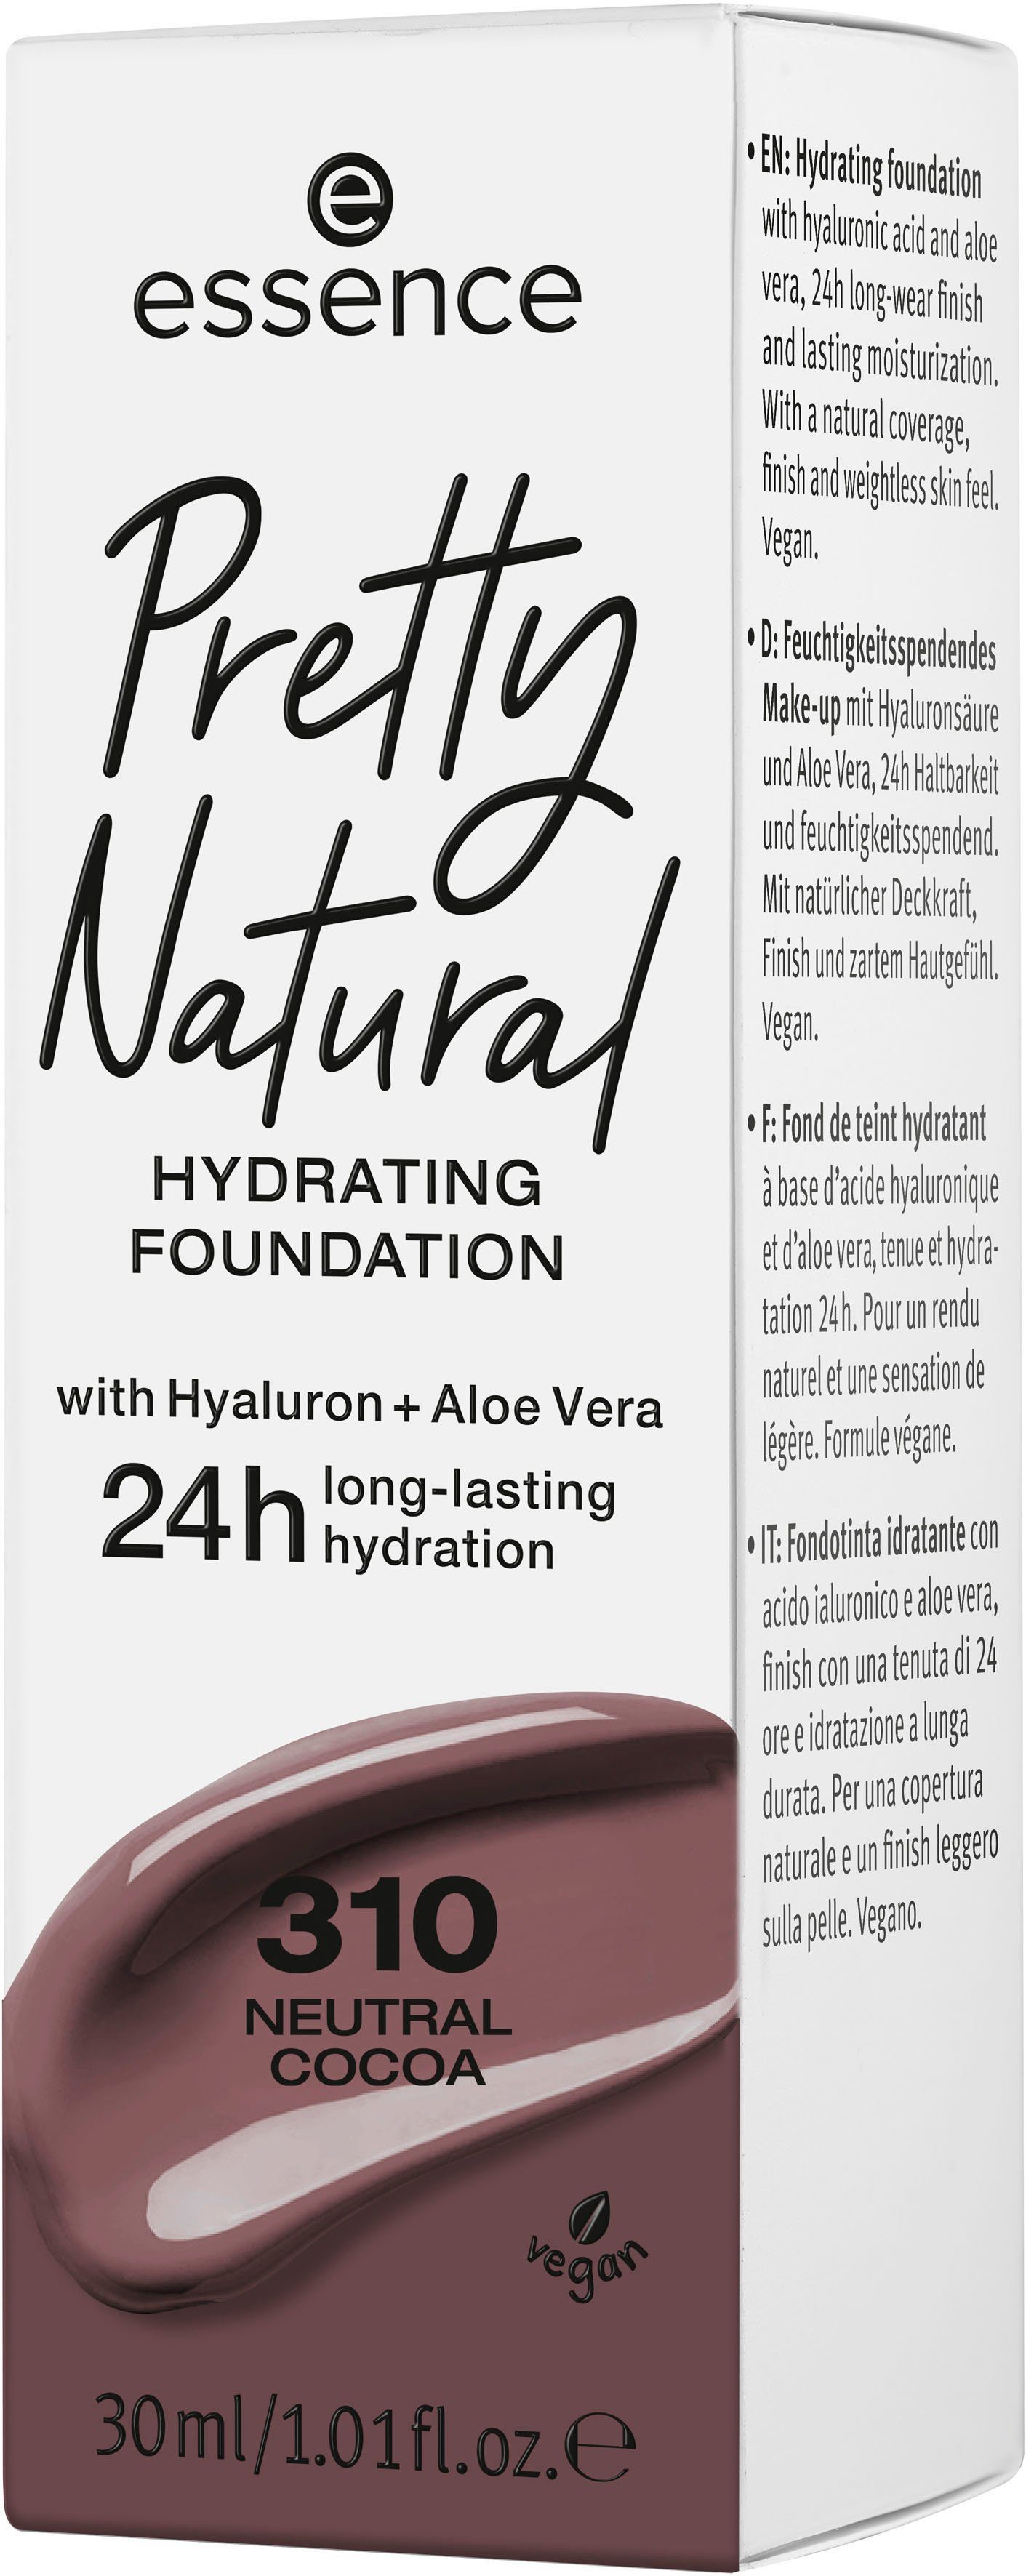 Natural Foundation Pretty 3-tlg. HYDRATING, Essence Neutral Cocoa